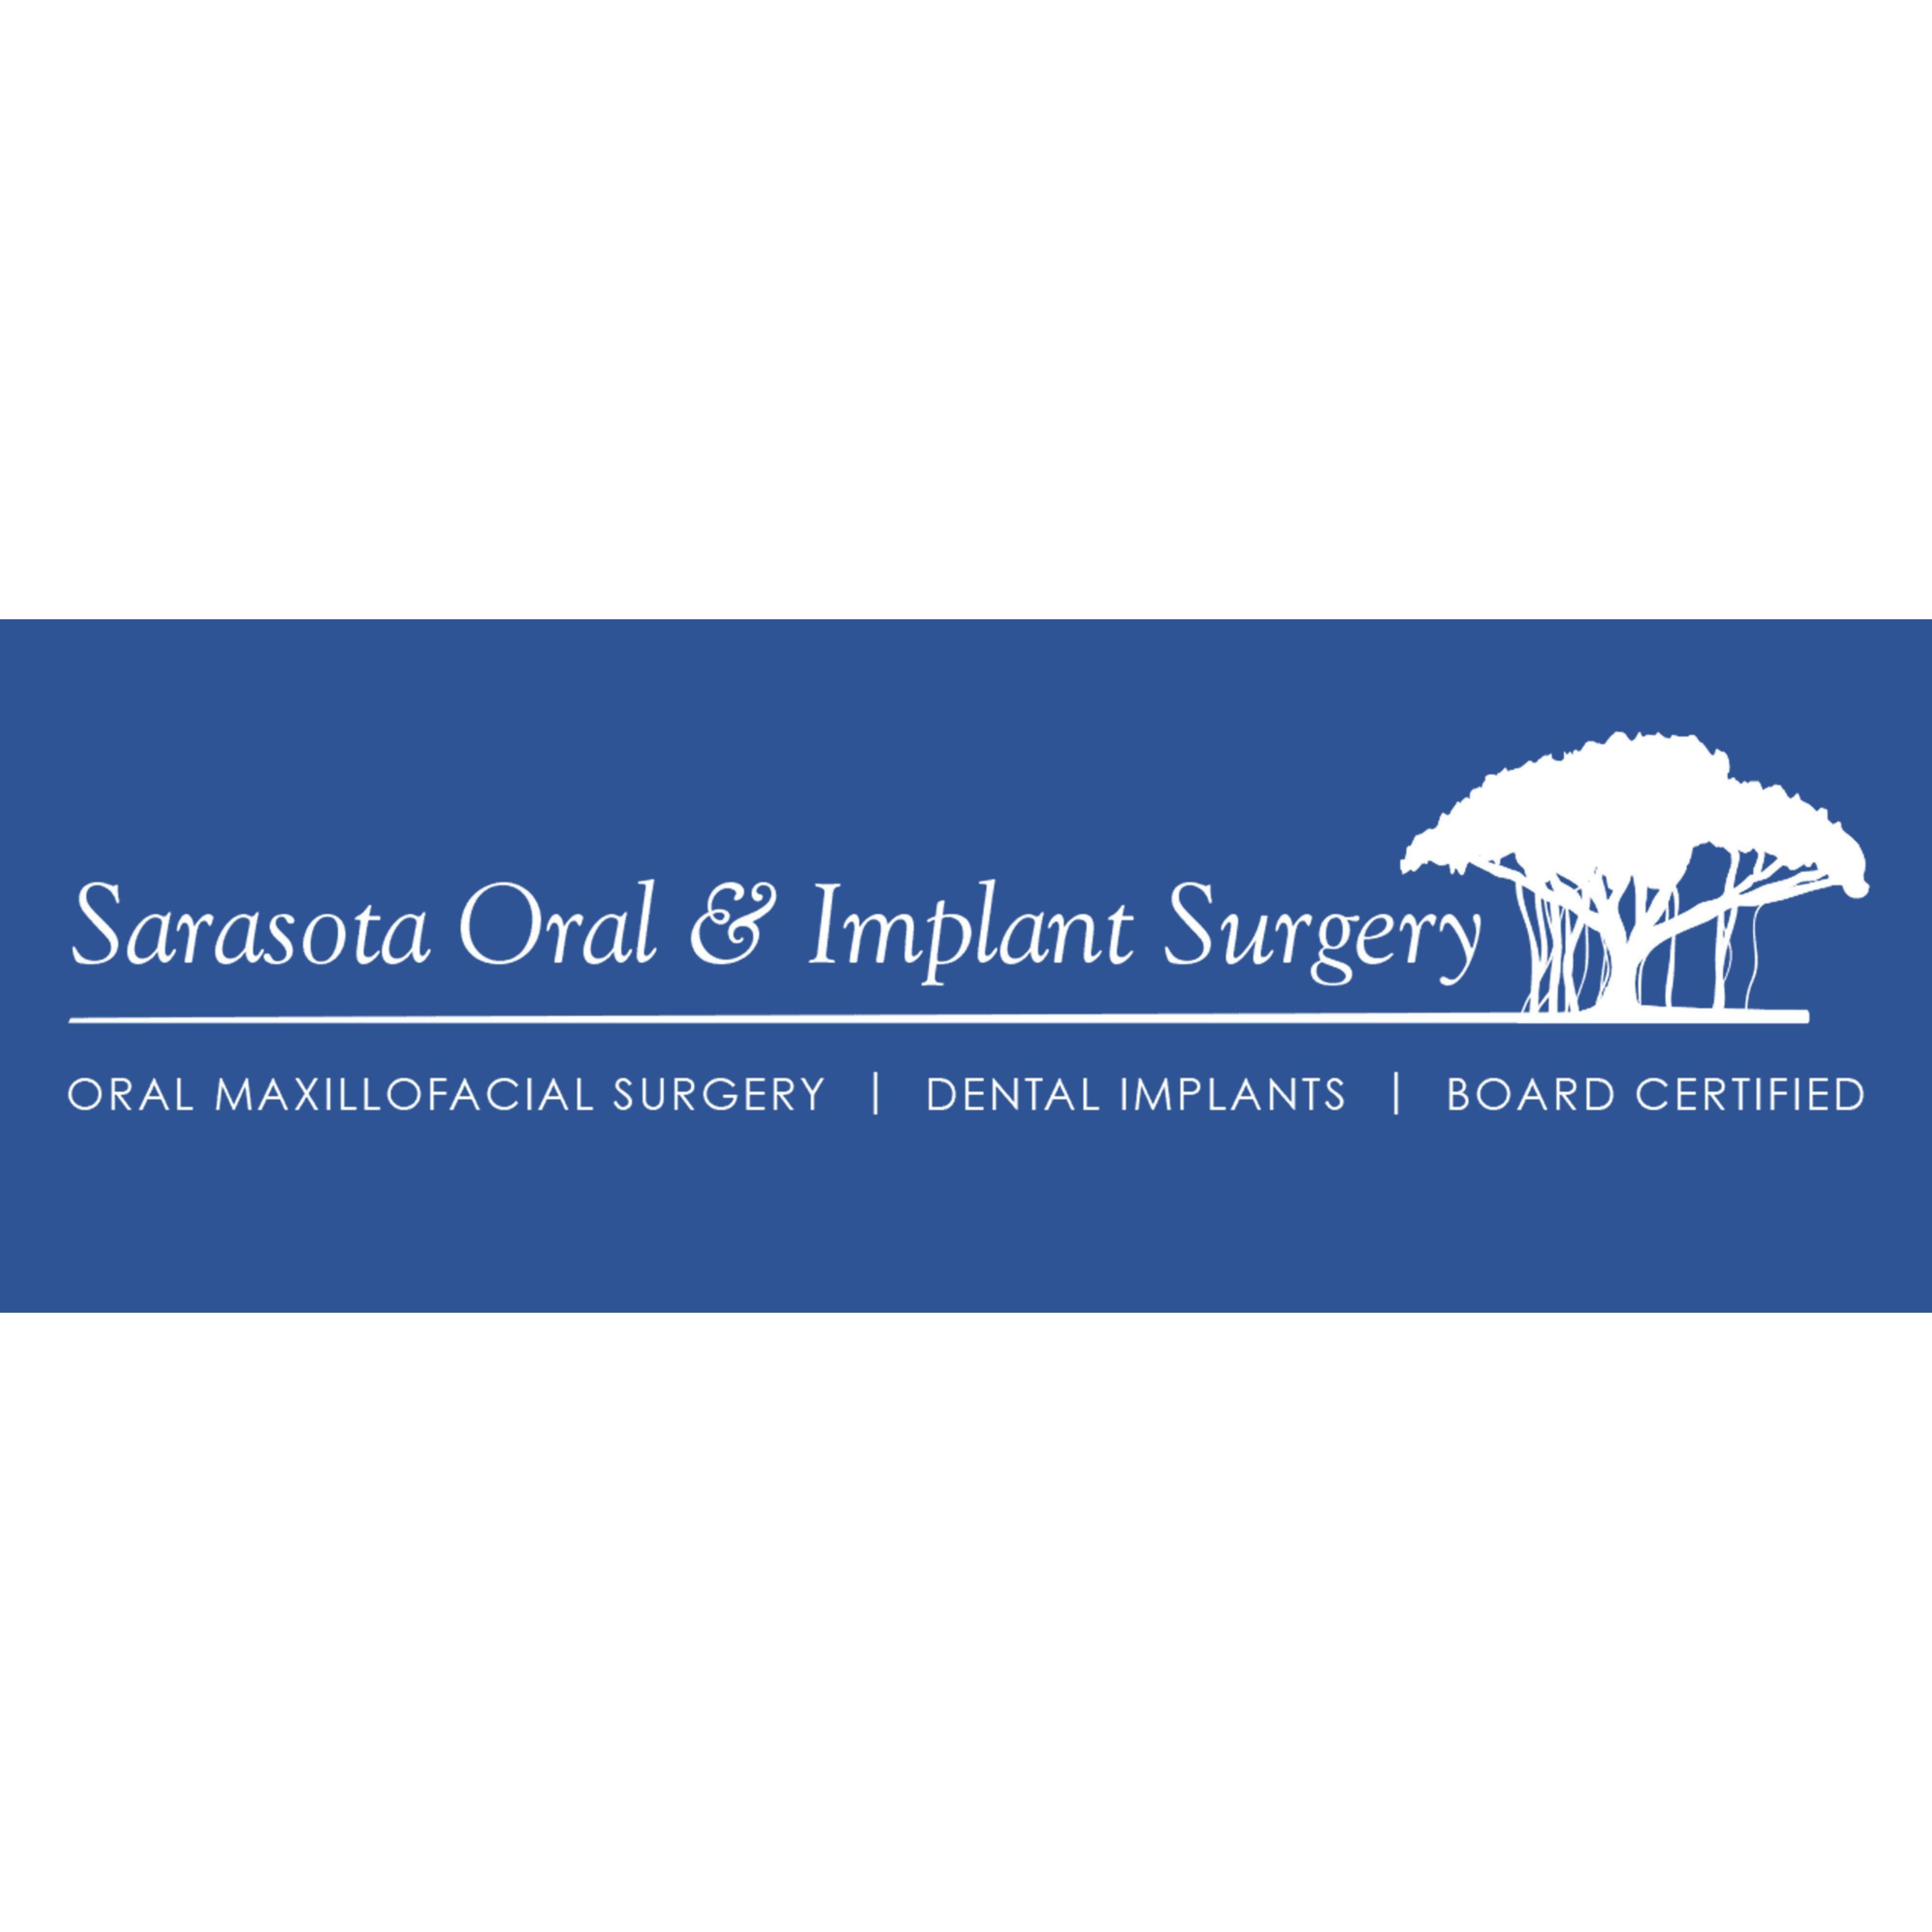 Sarasota Oral & Implant Surgery